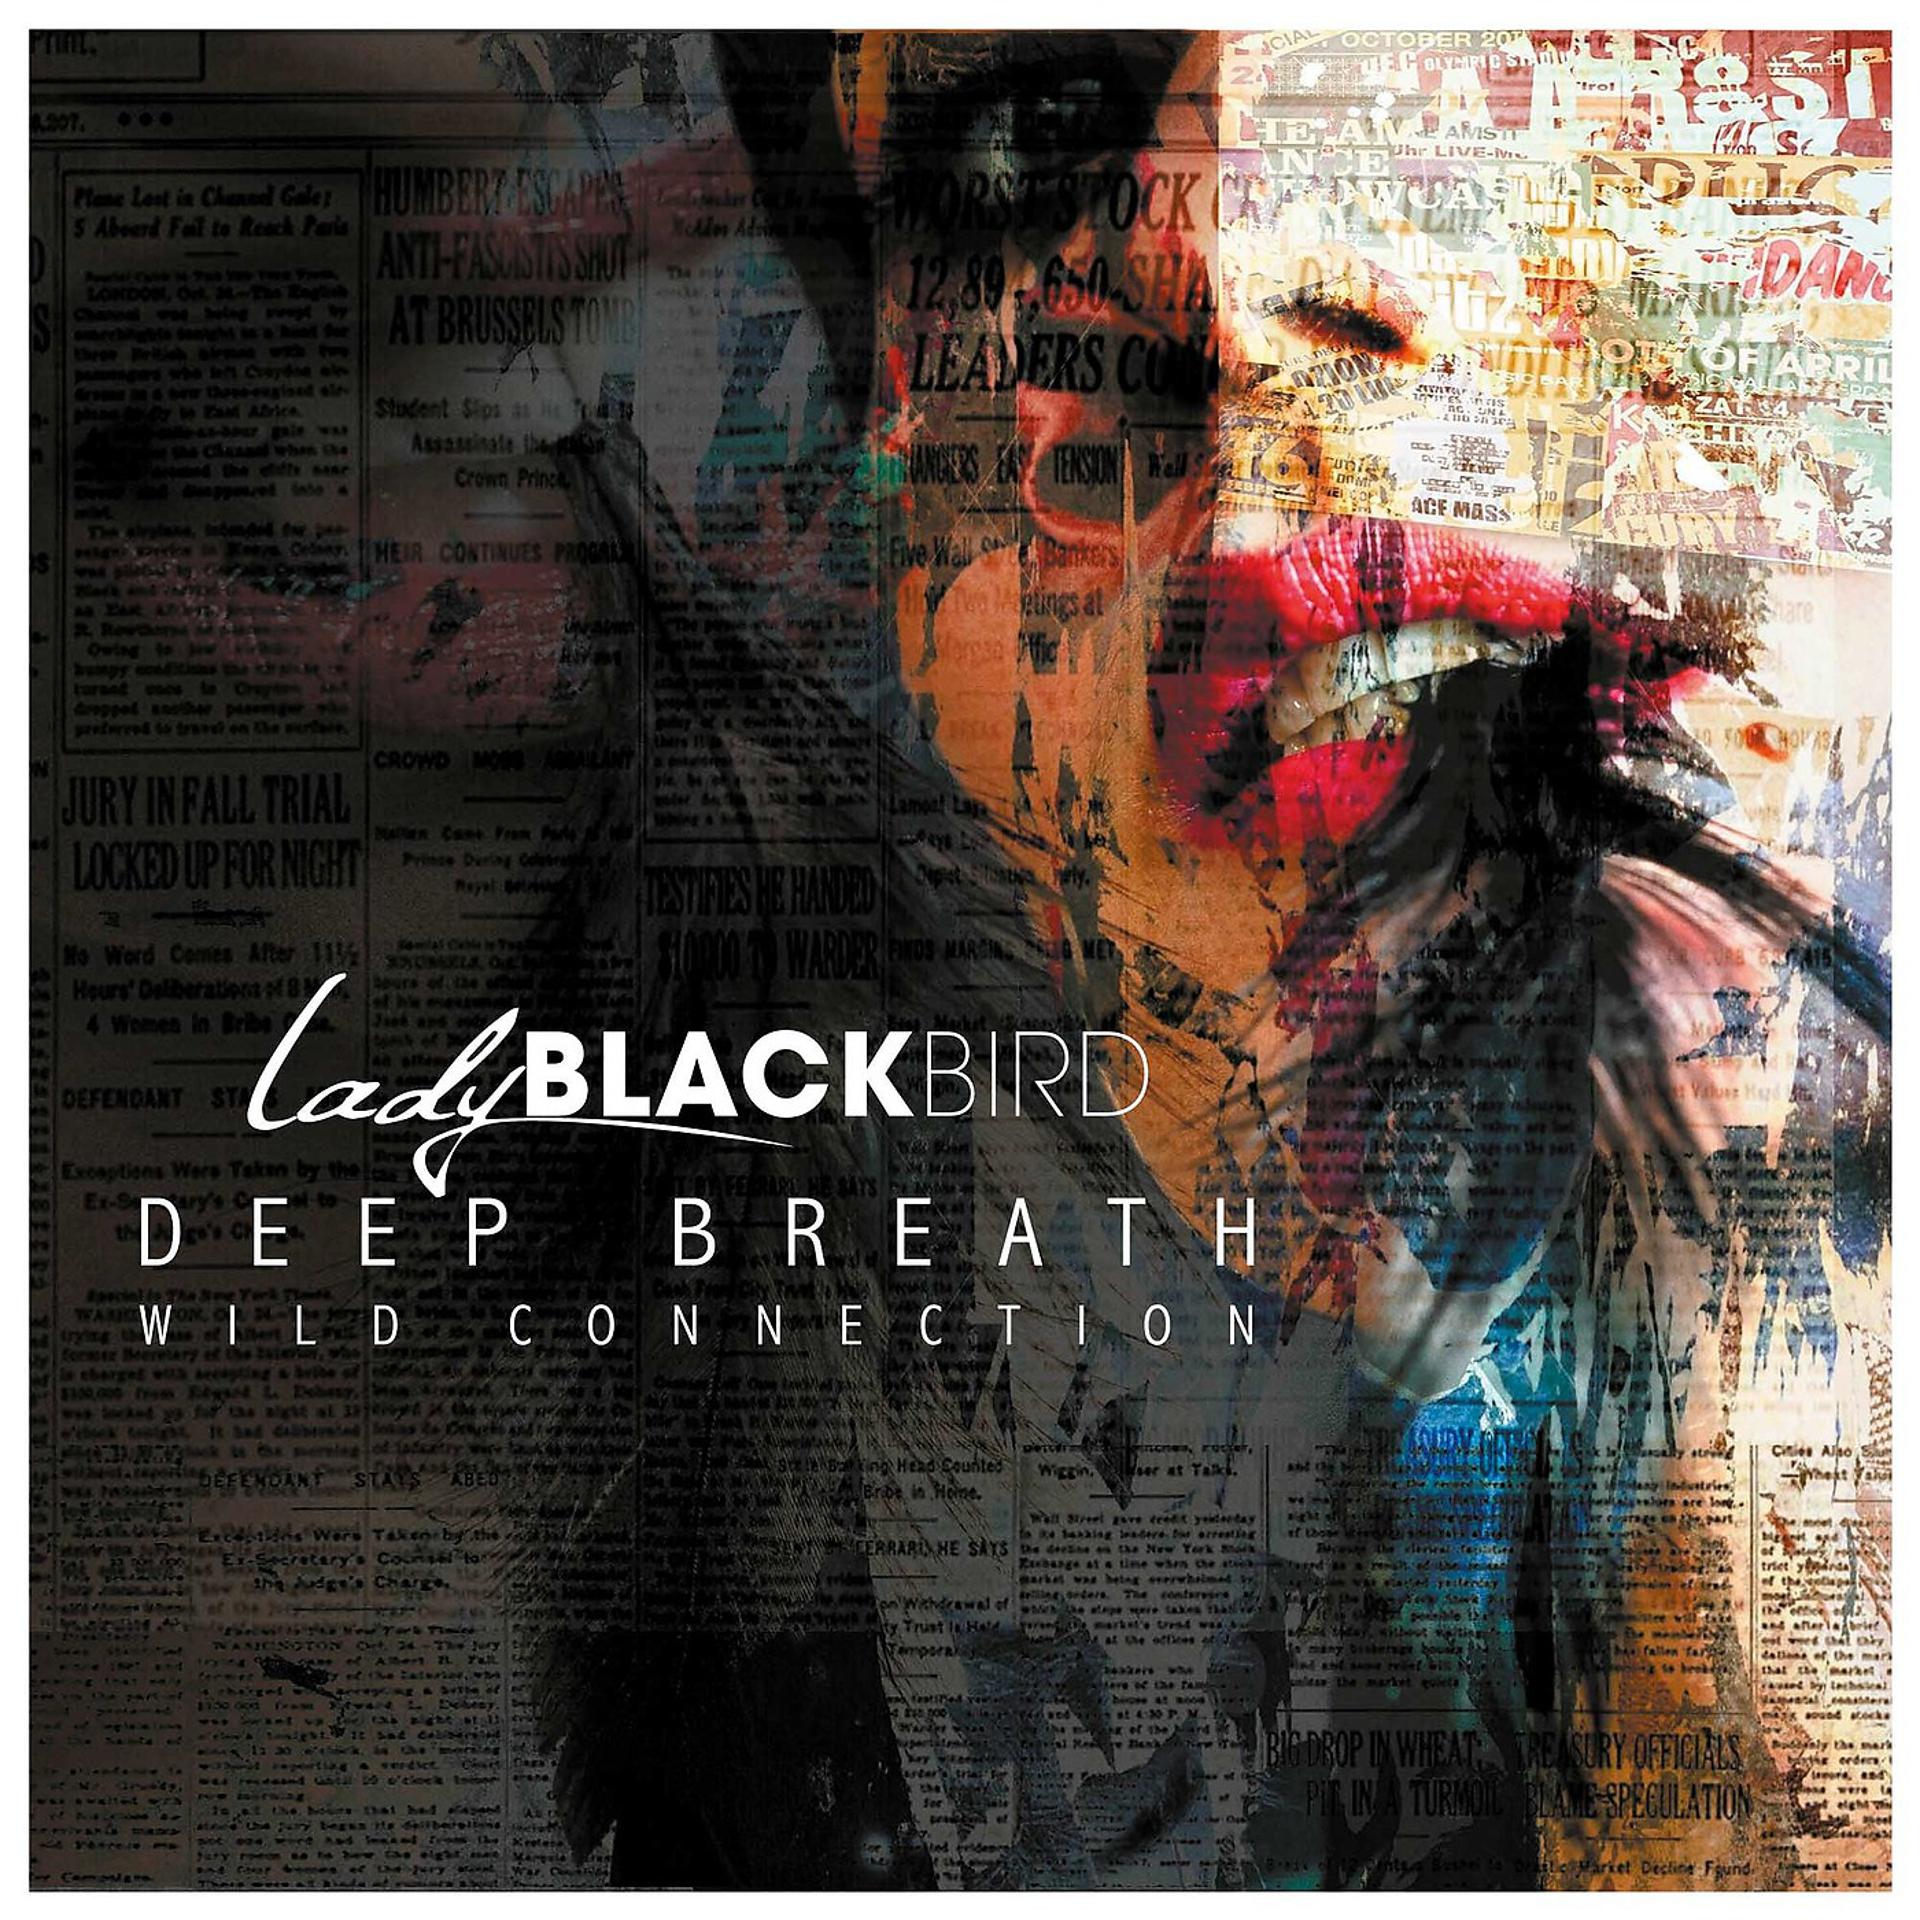 Постер к треку Lady BLACK BIRD - Sing It Back